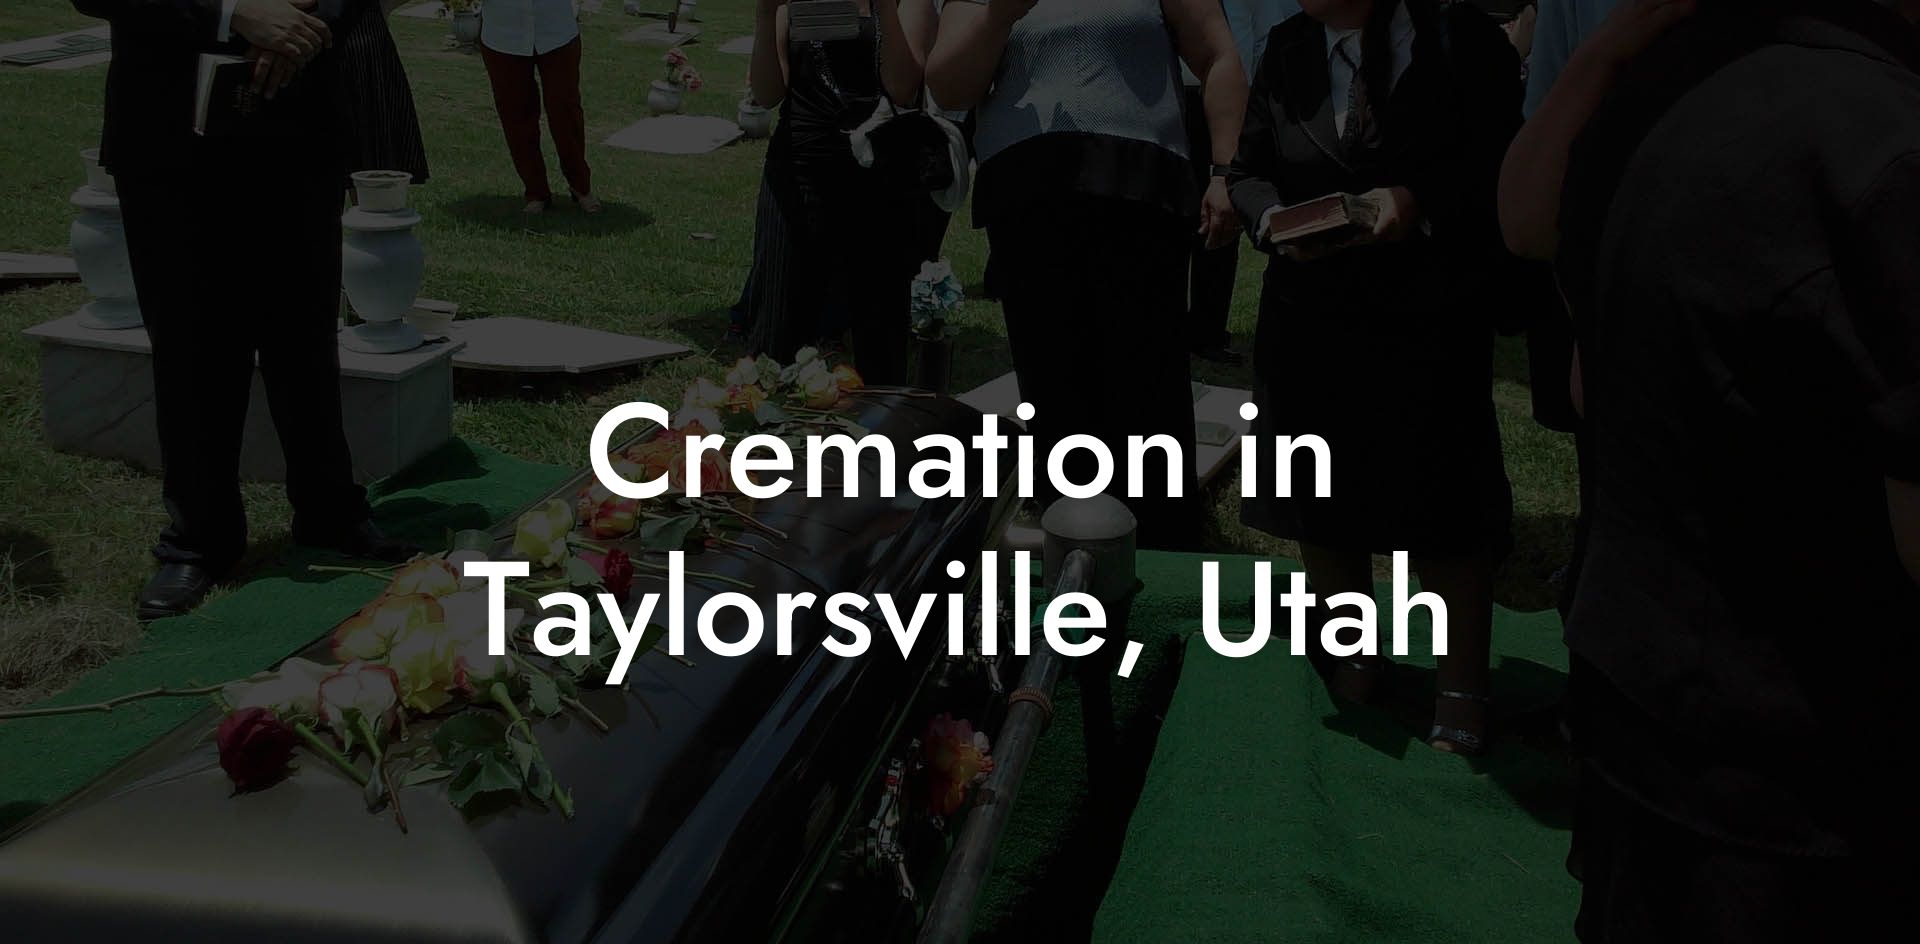 Cremation in Taylorsville, Utah